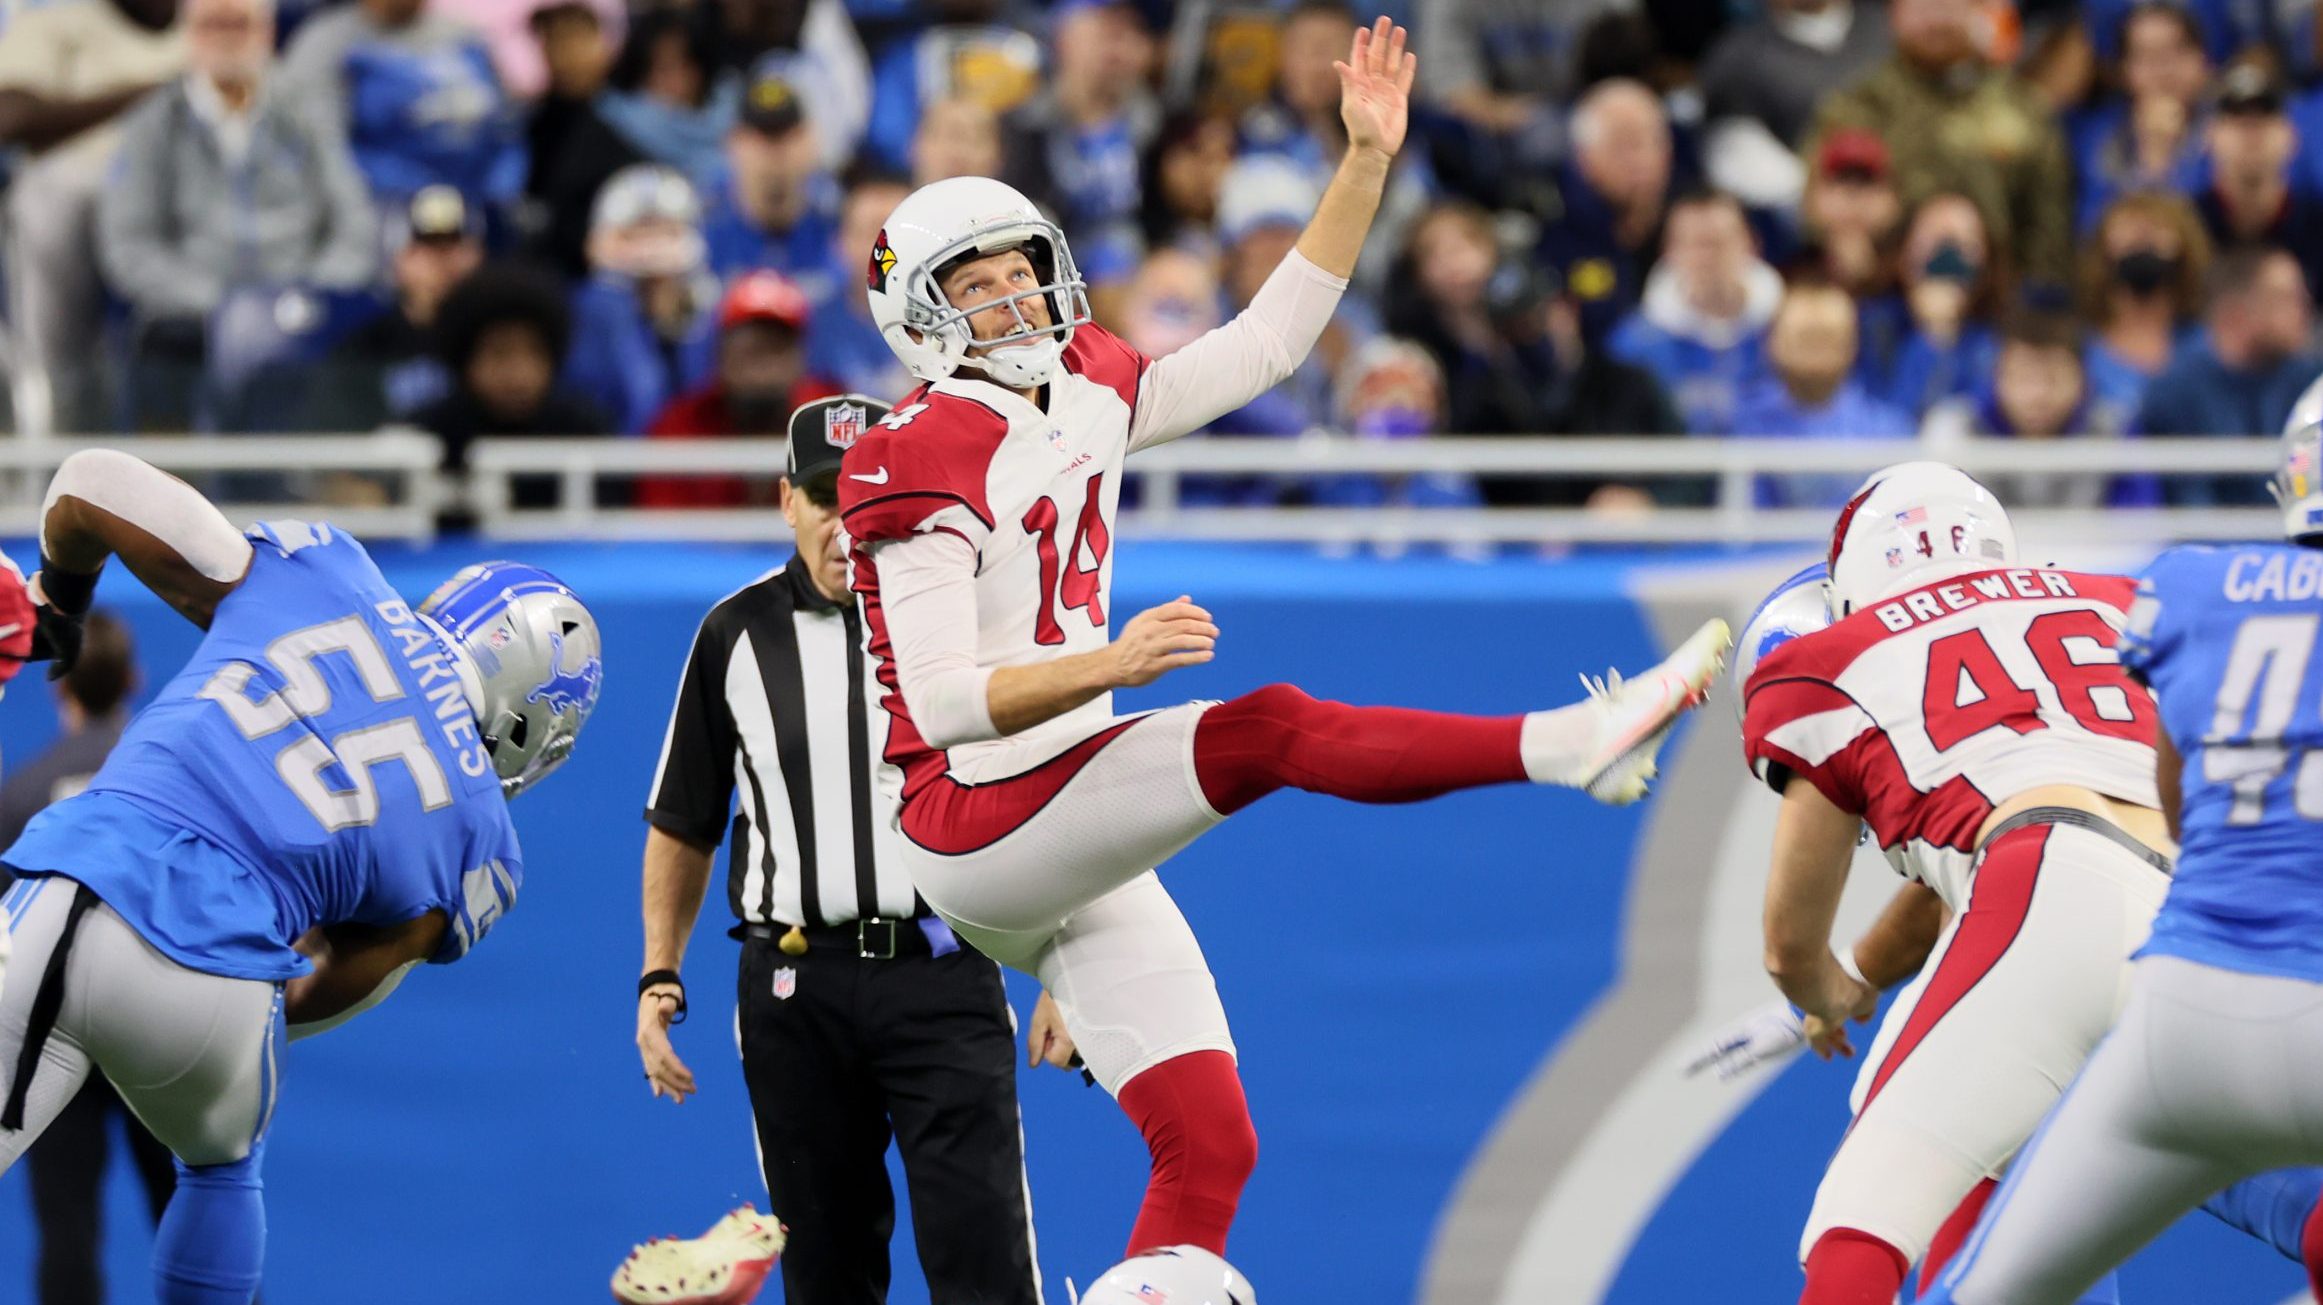 Arizona Cardinals punter Andy Lee (14) follows his kick during an NFL football game between the Det...